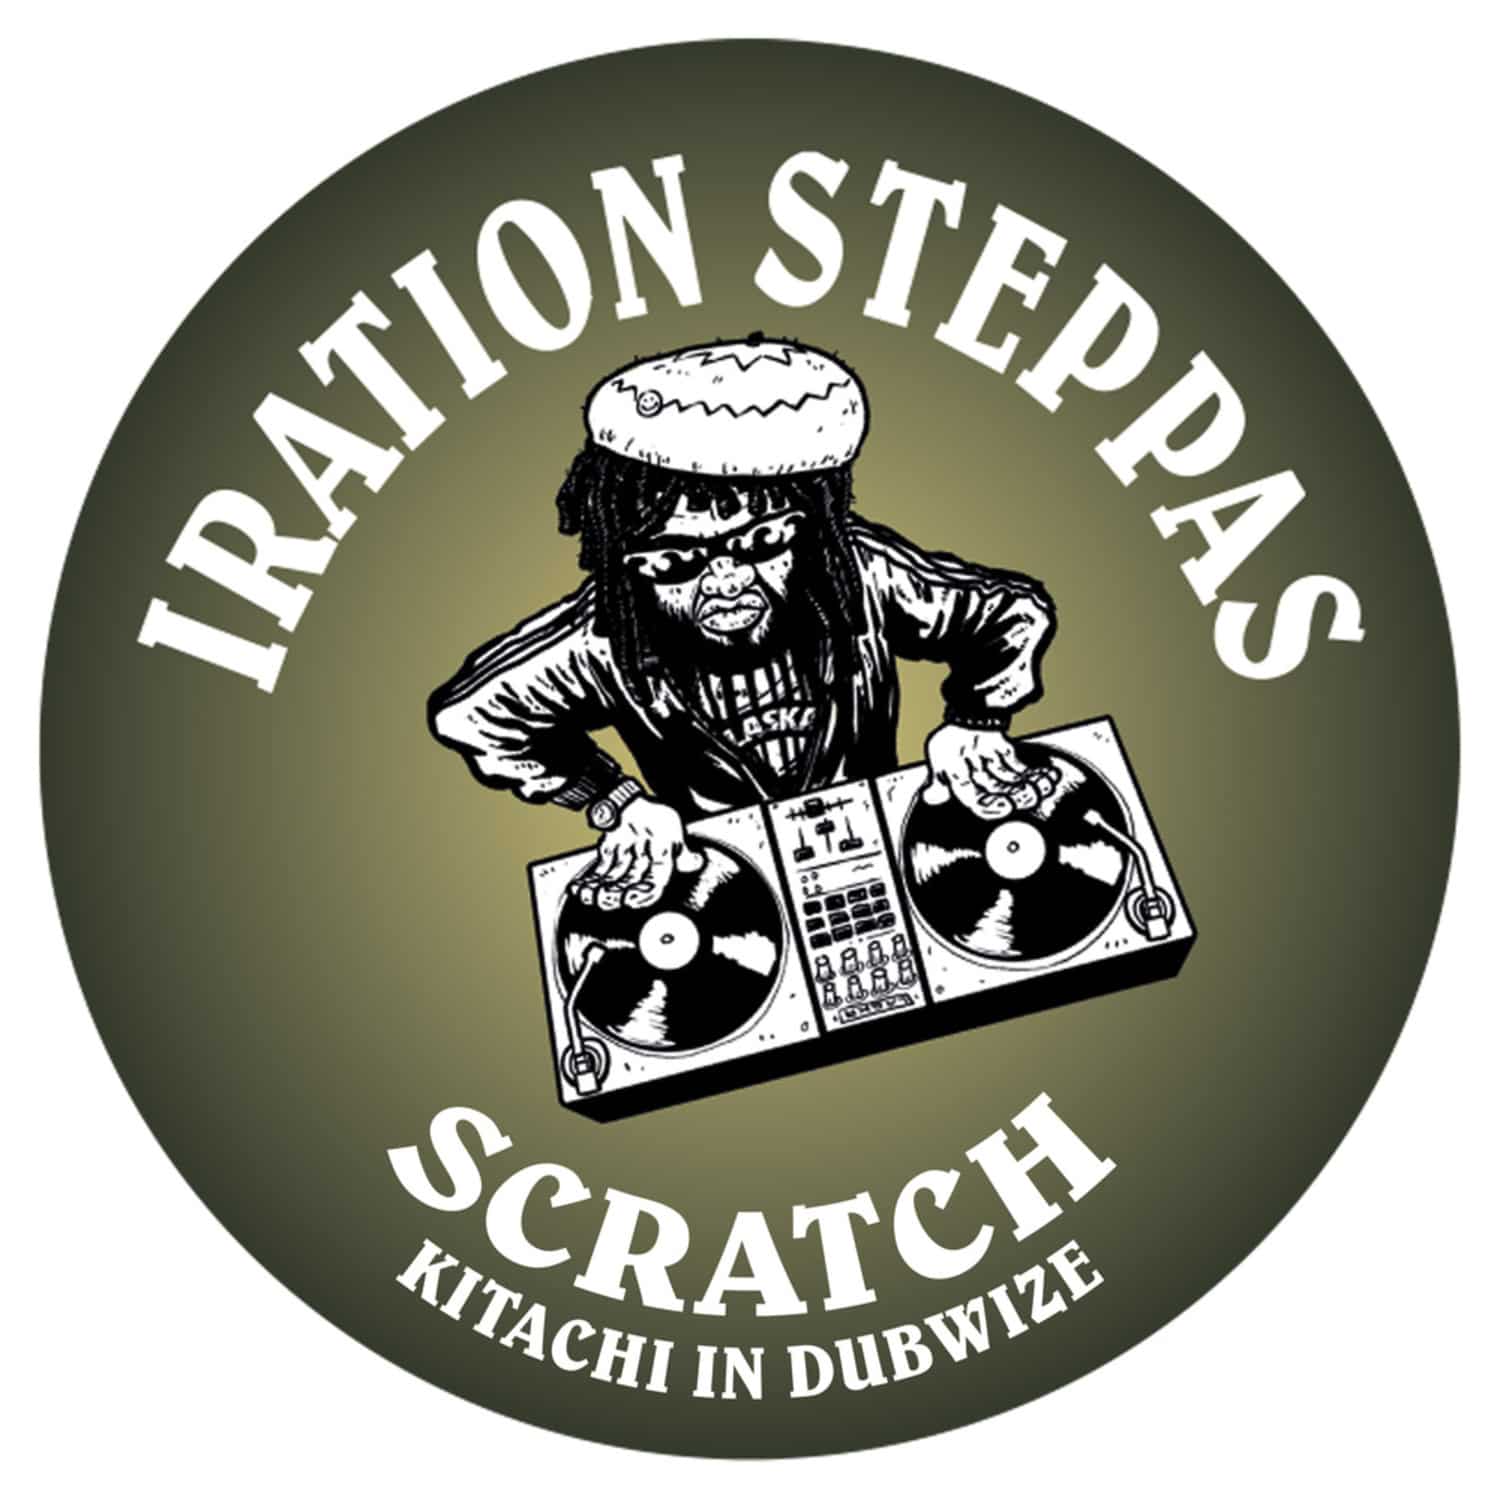 Iration Steppas - SCRATCH 